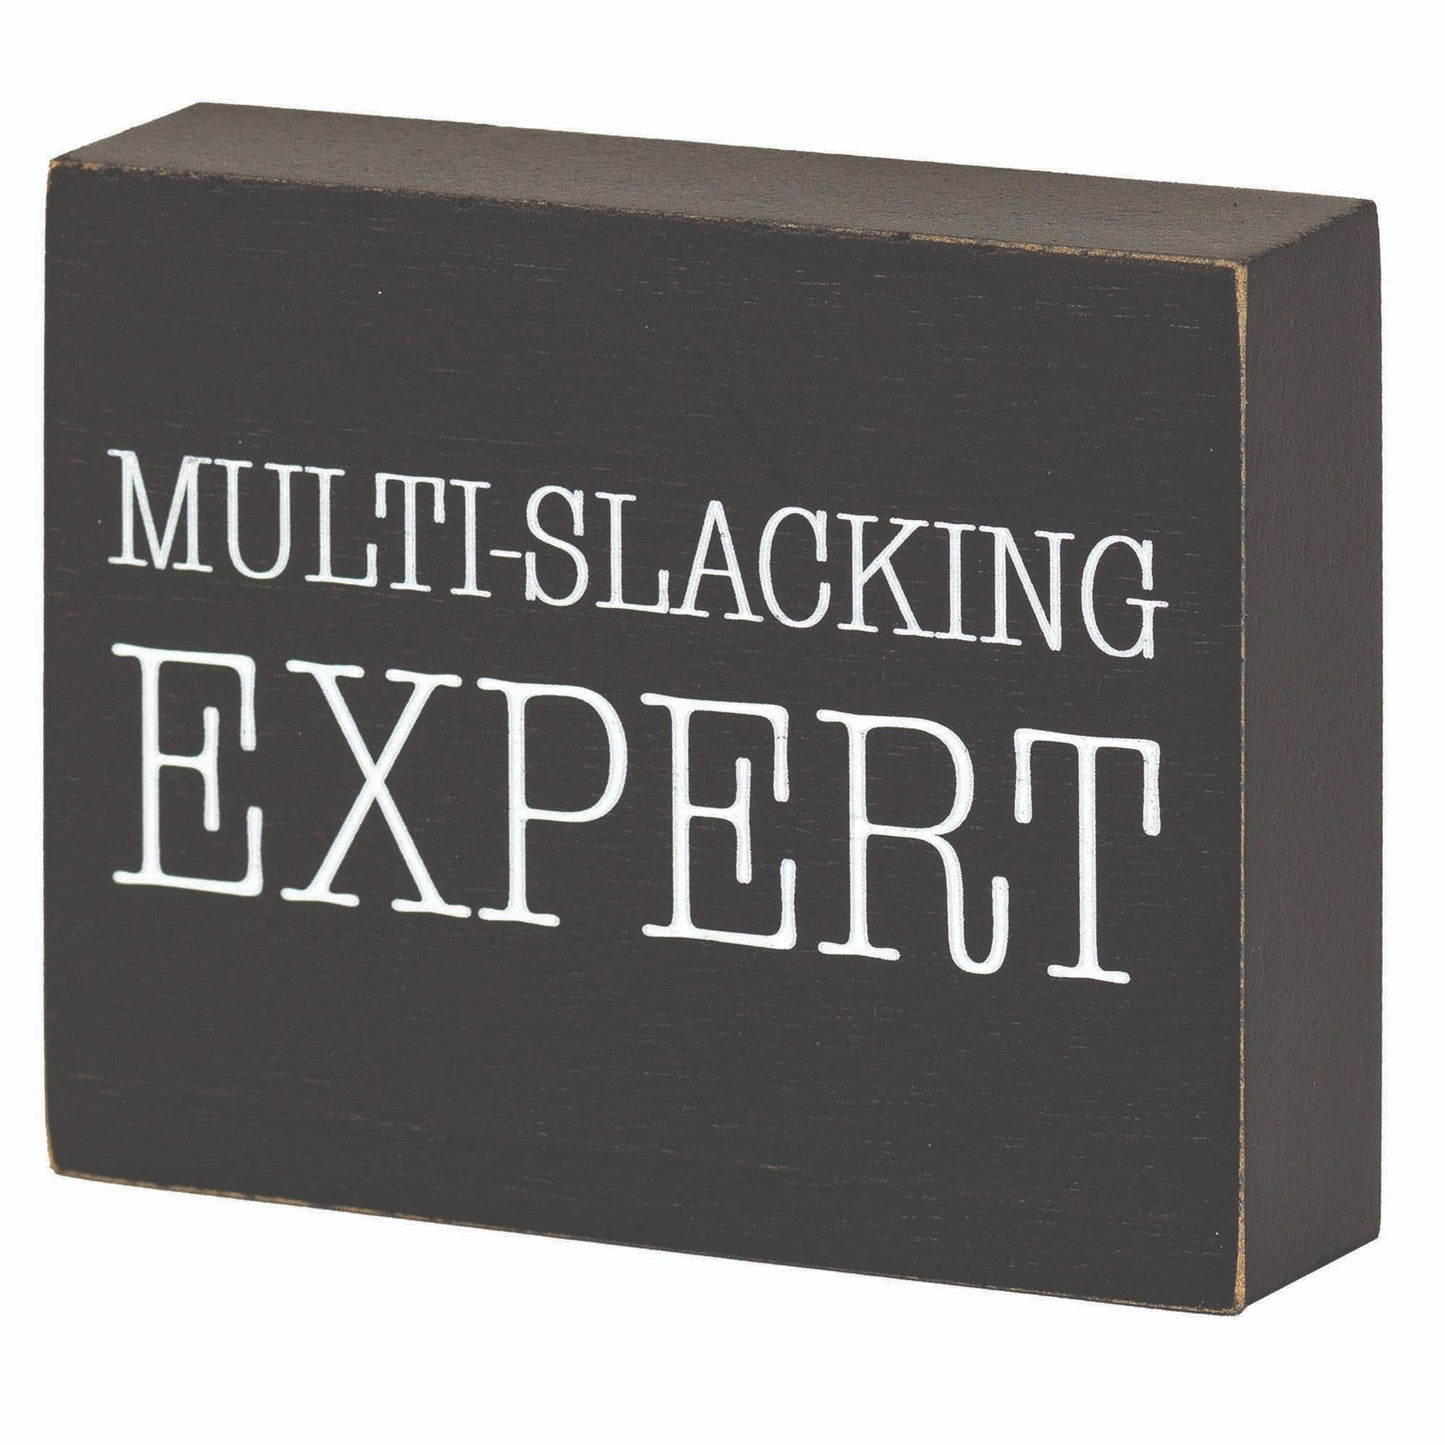 Multi-Slacking Expert Tabletop Plock